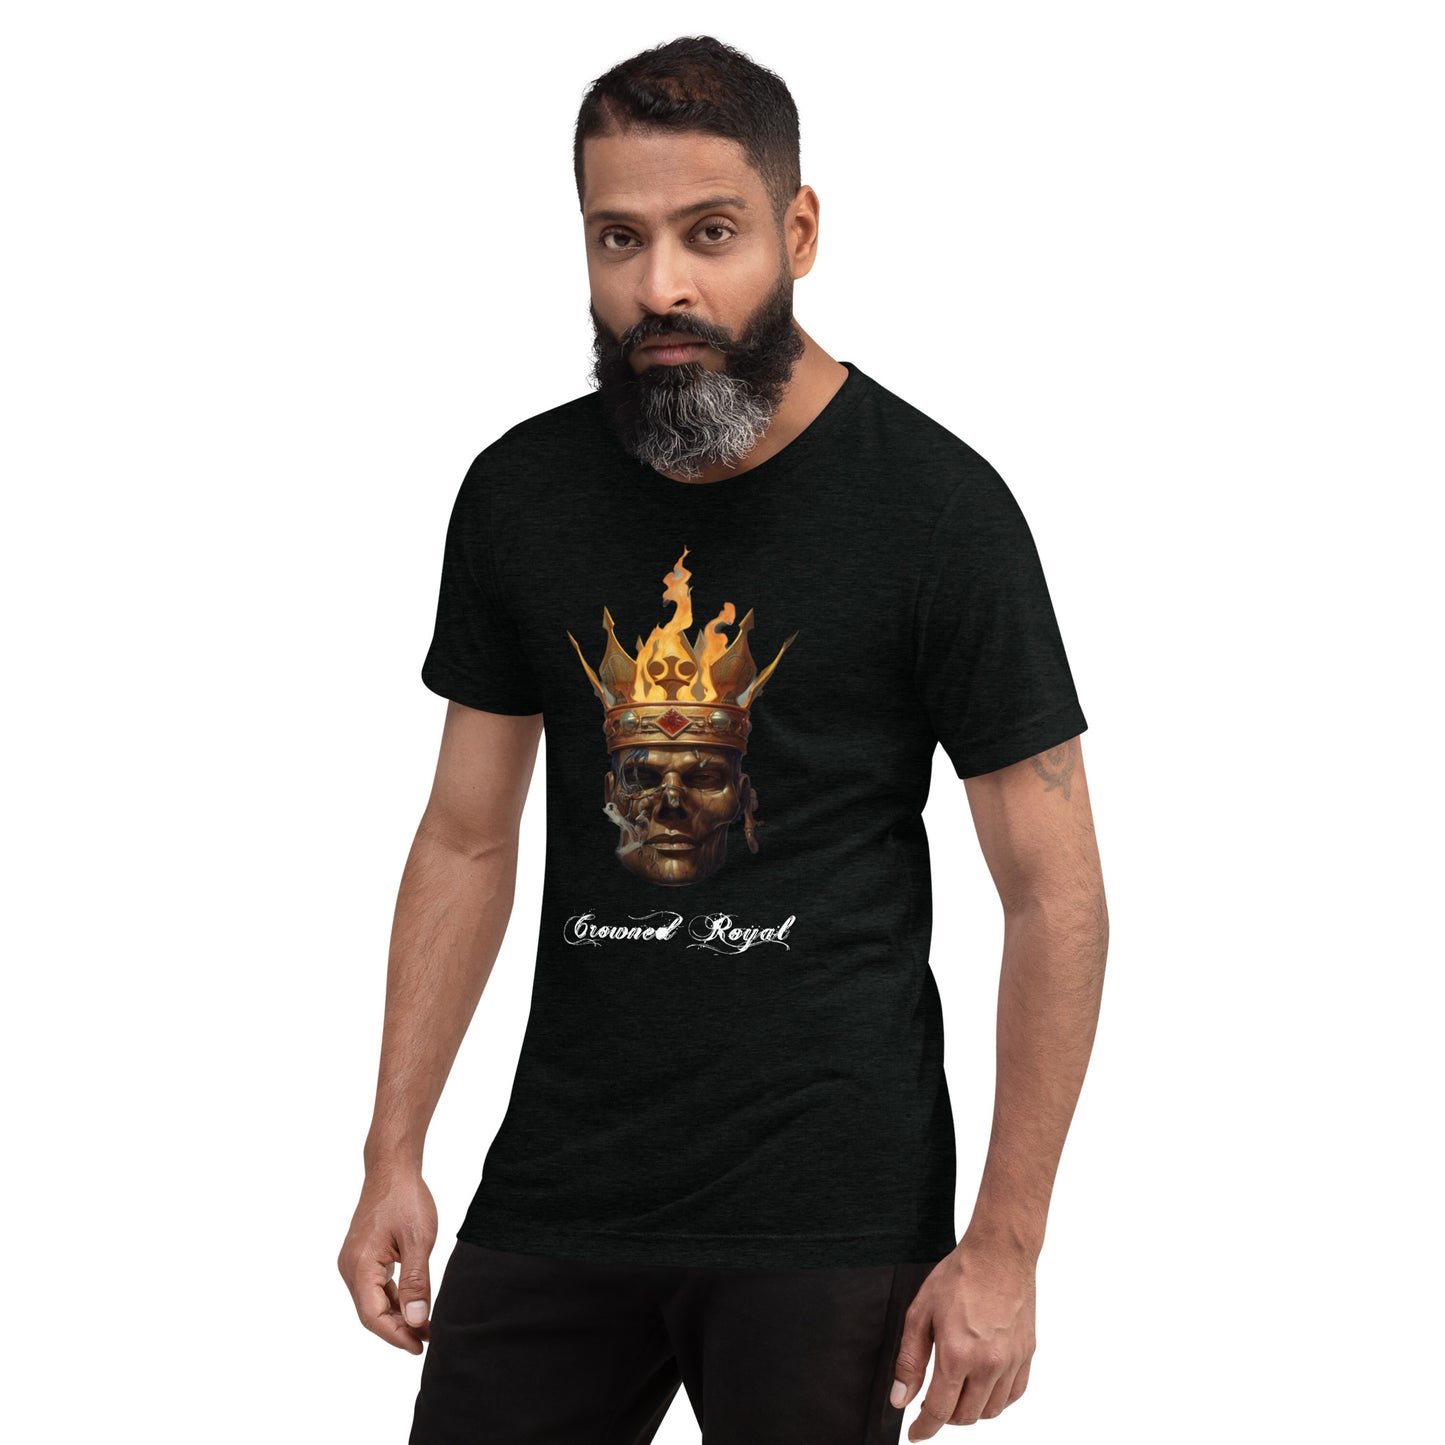 Crowned Royal T-Shirt